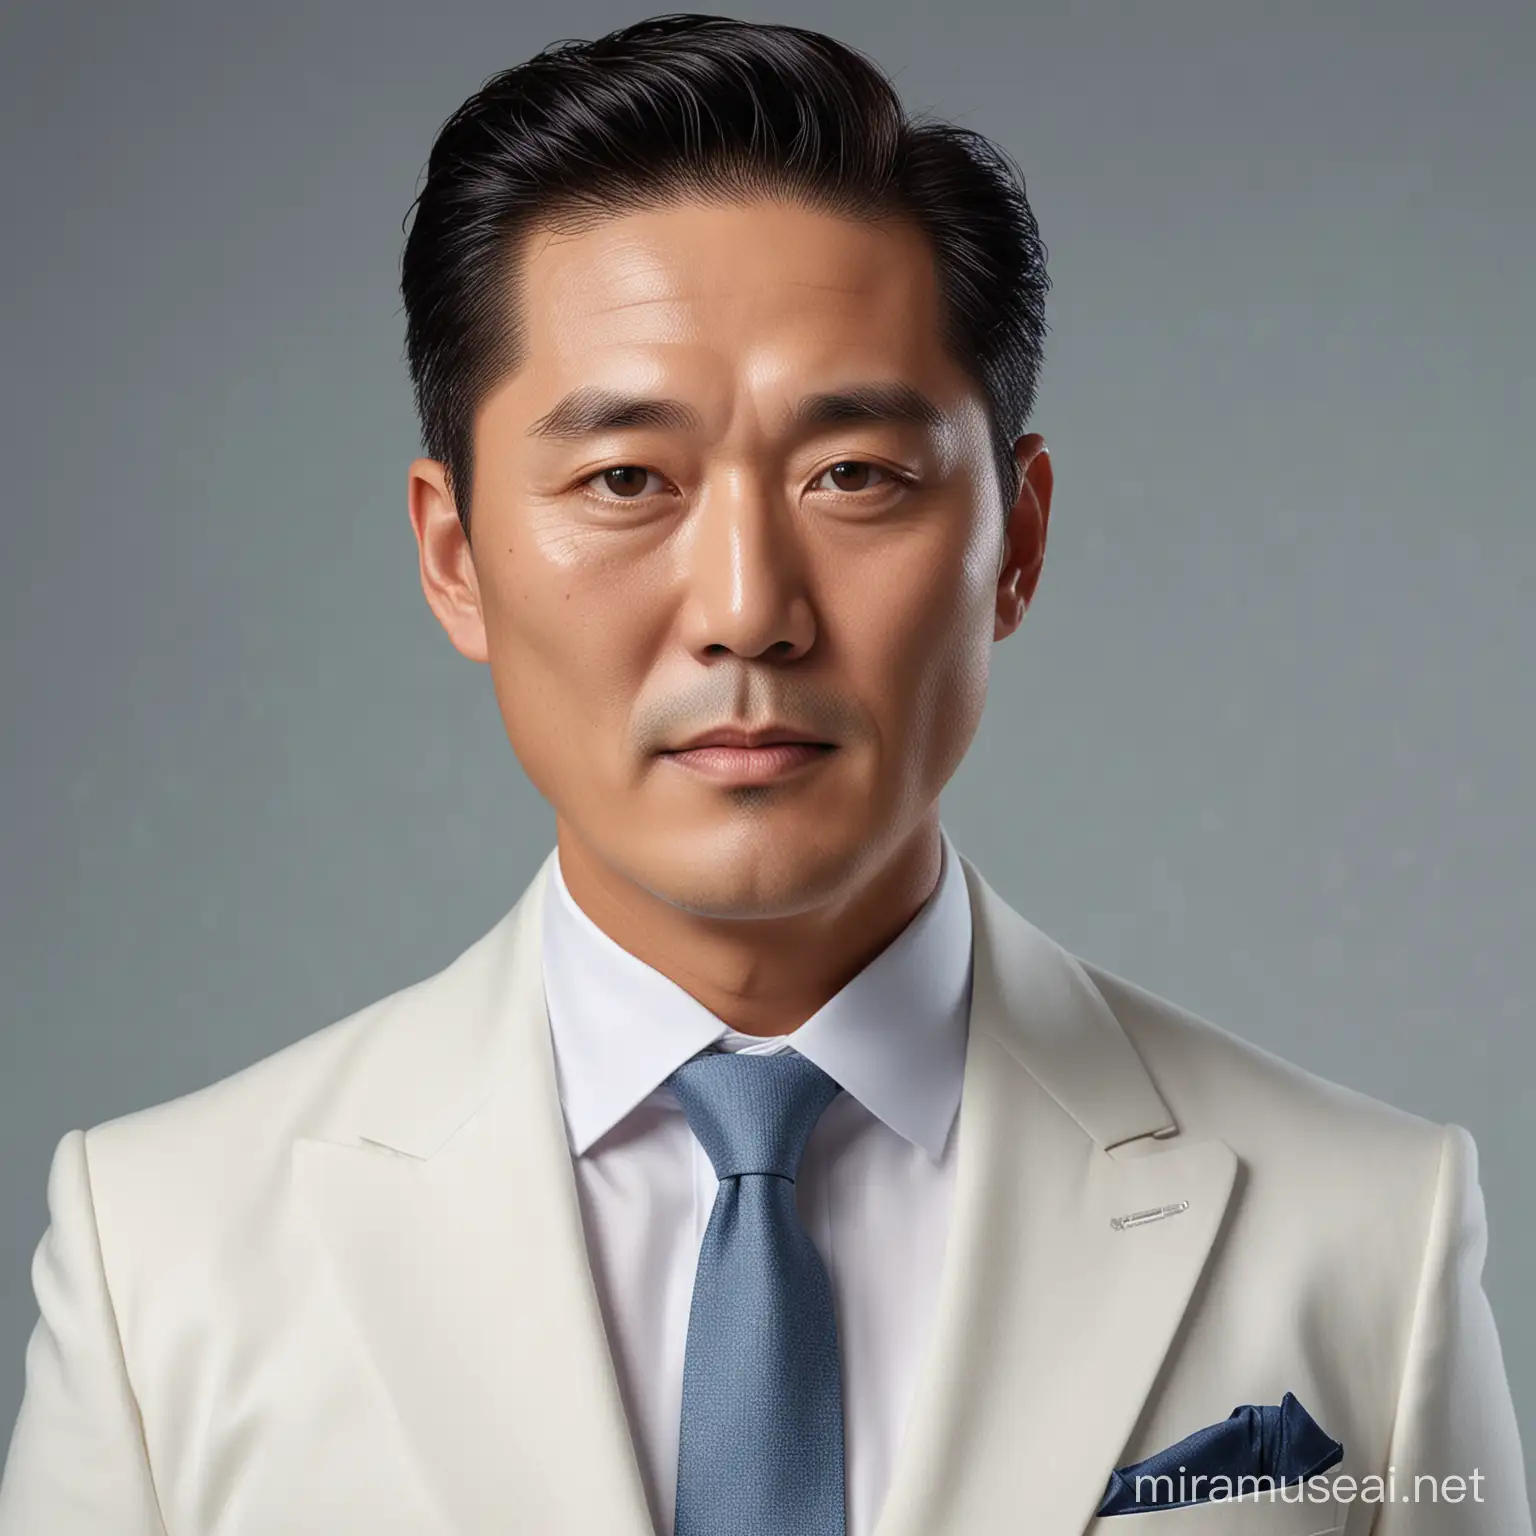 Elegant Mixed Korean Gentleman in White Suit